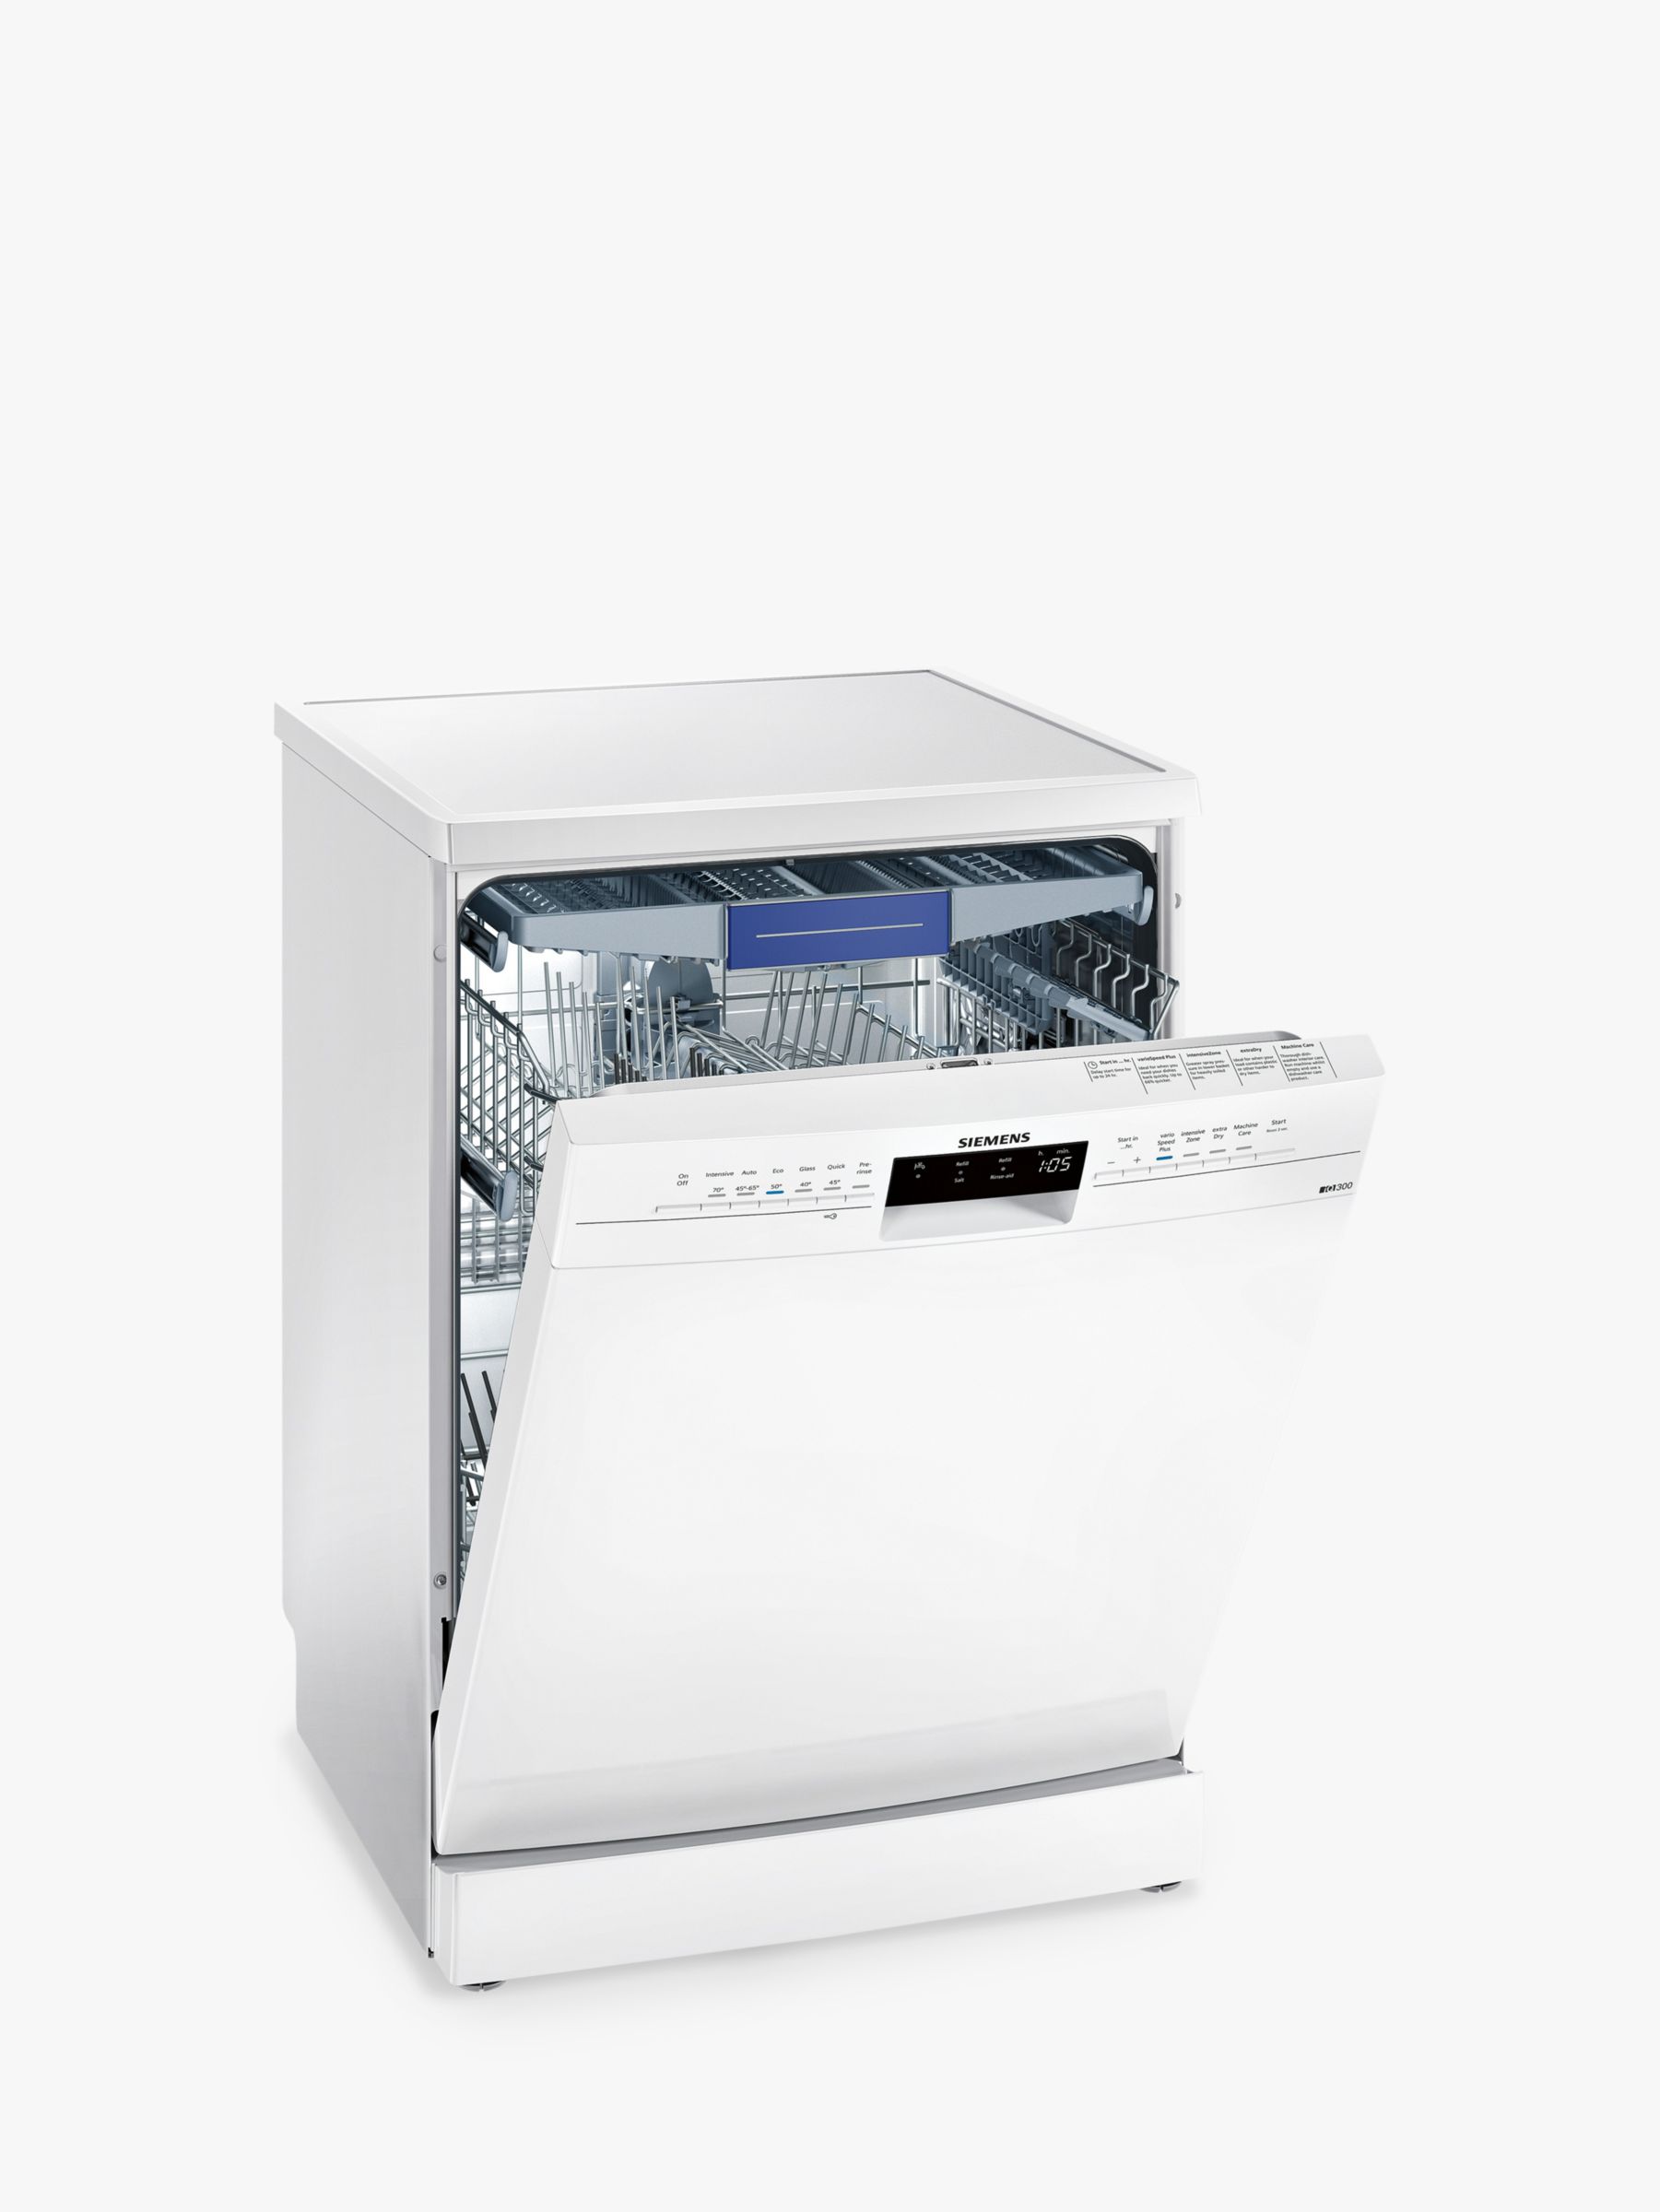 Siemens SN236W01MG Freestanding Dishwasher, White